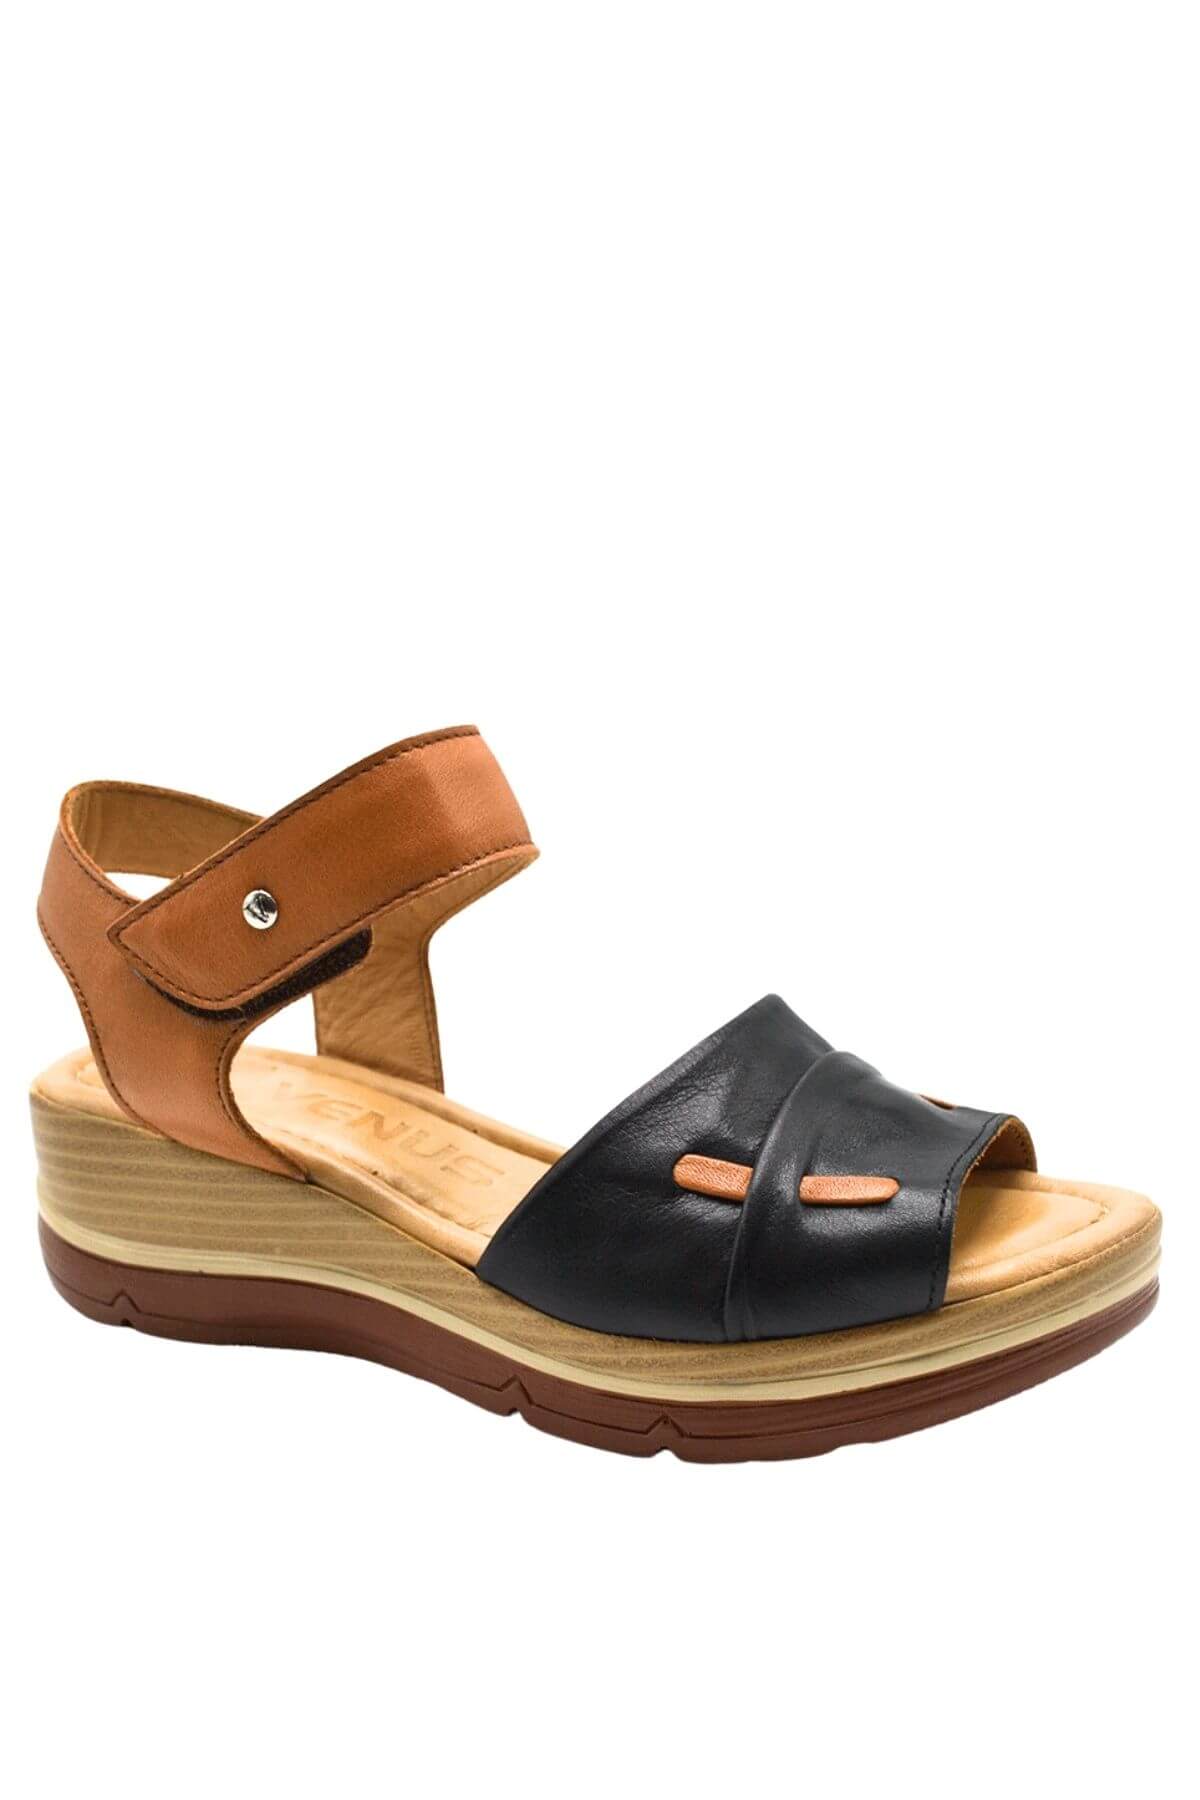 Kadın Comfort Deri Sandalet Siyah 2313402Y - Thumbnail